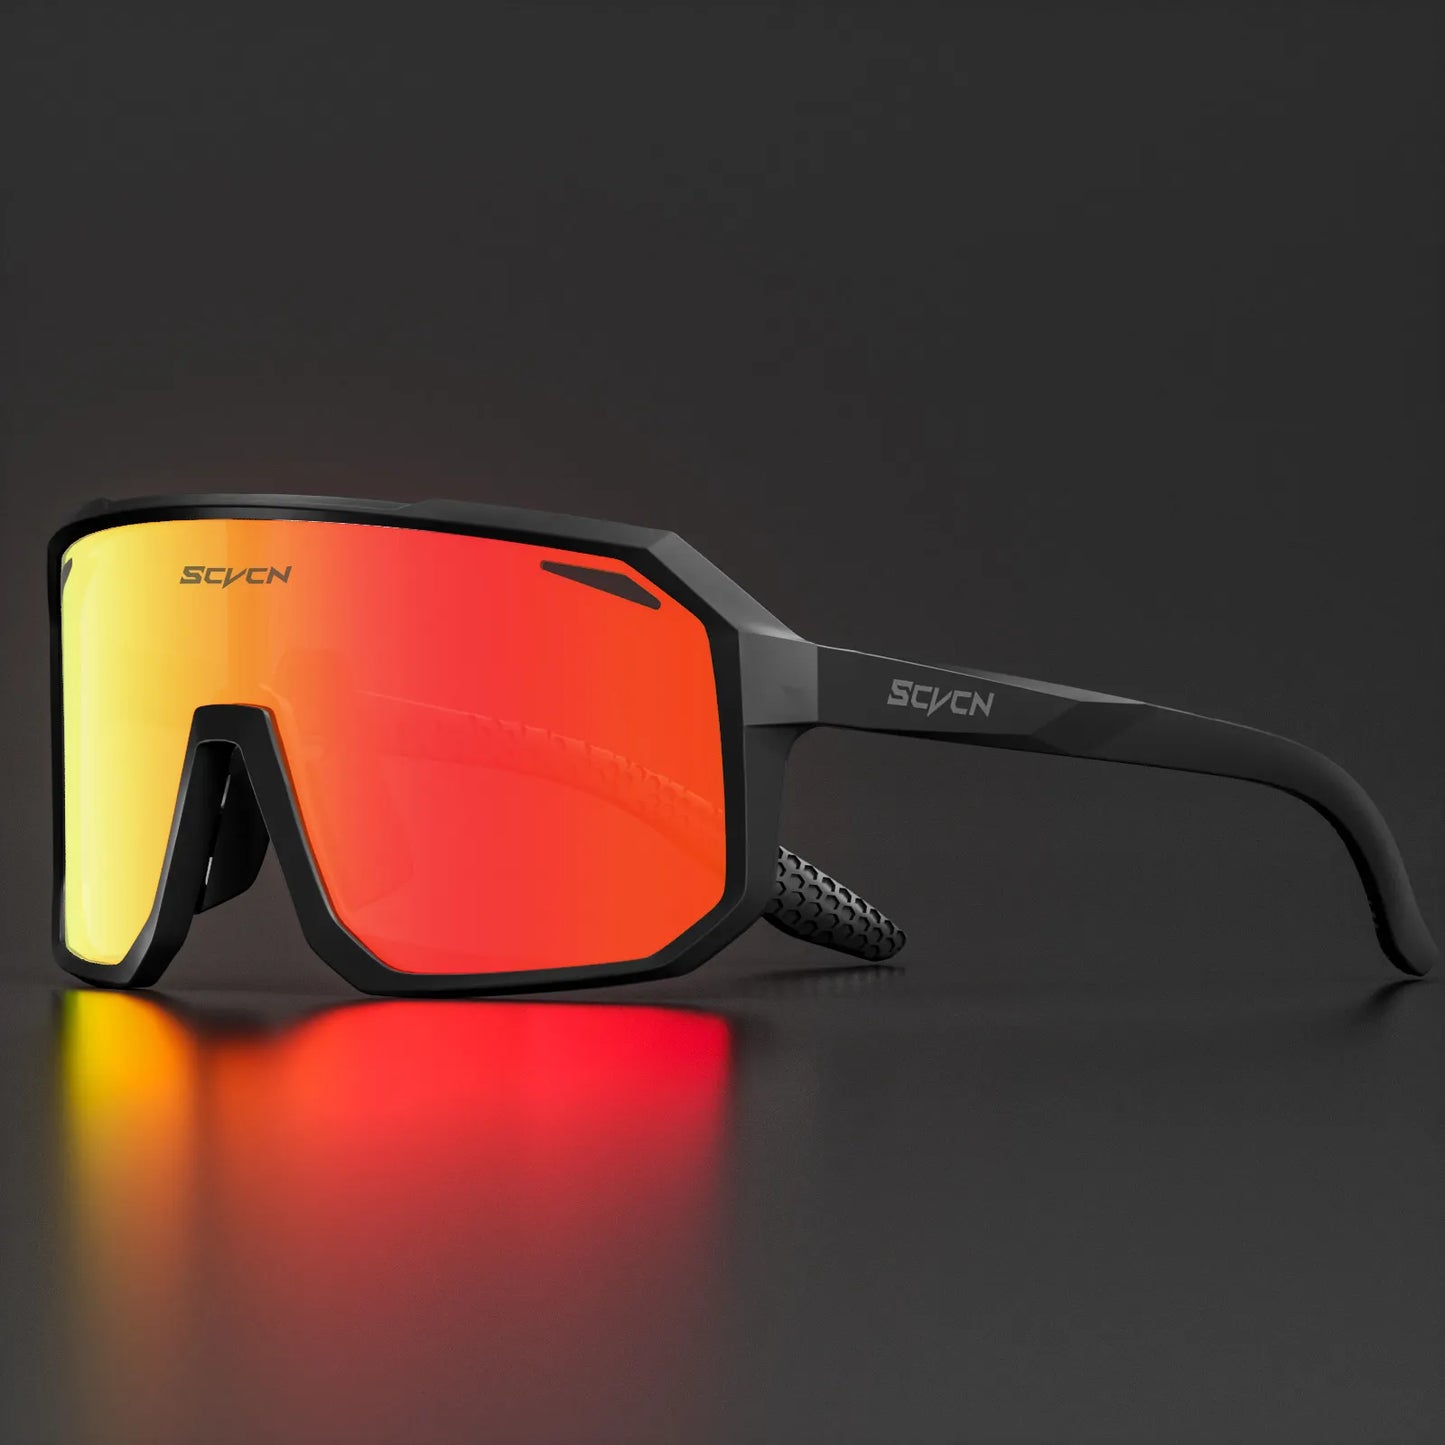 SCVCN Cycling/Sport Glasses